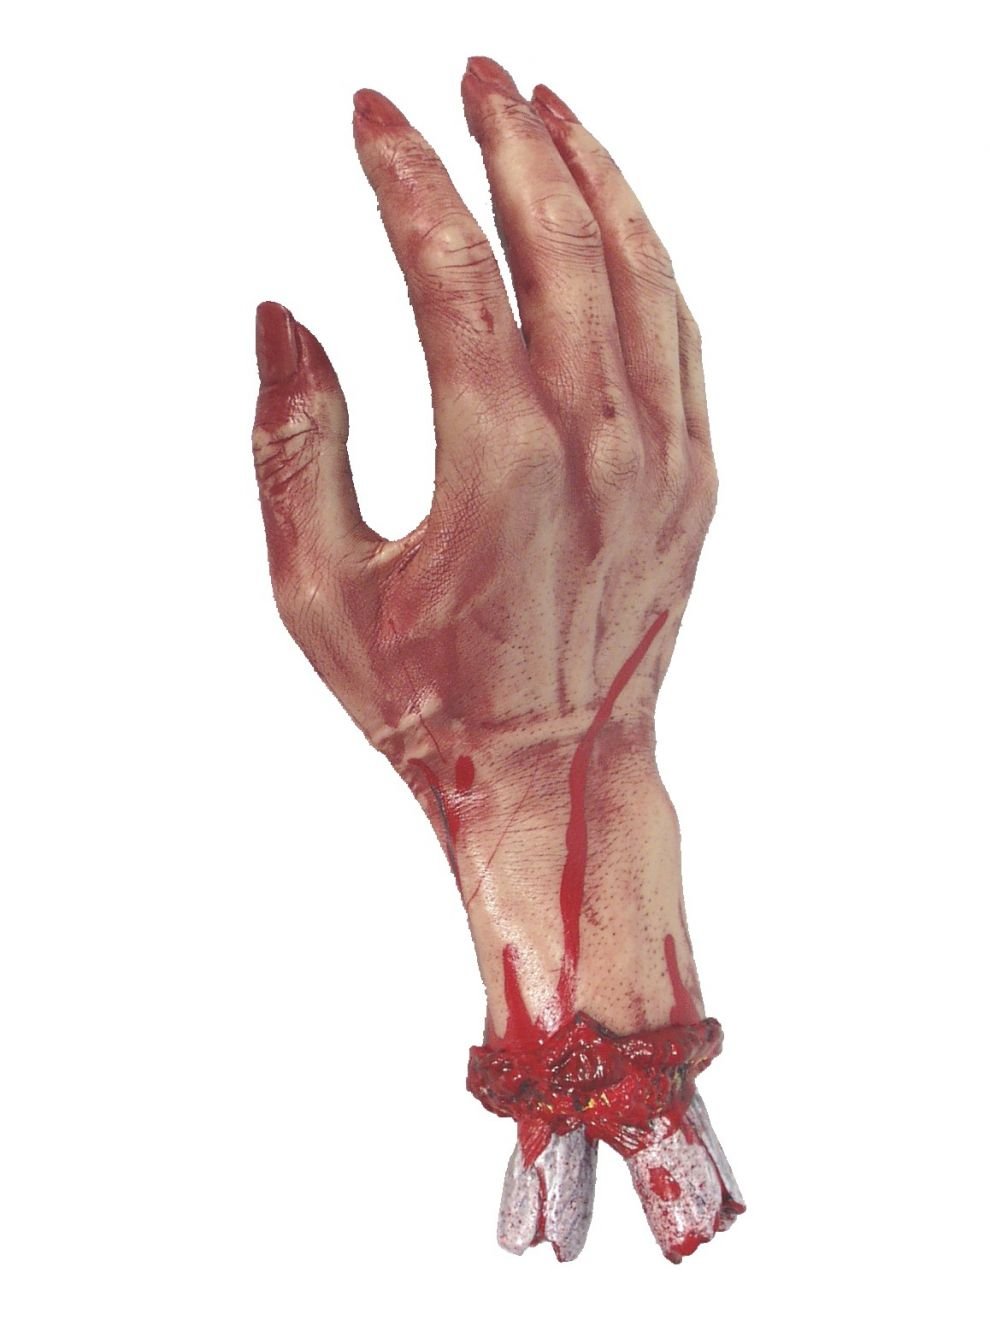 Severed Hand